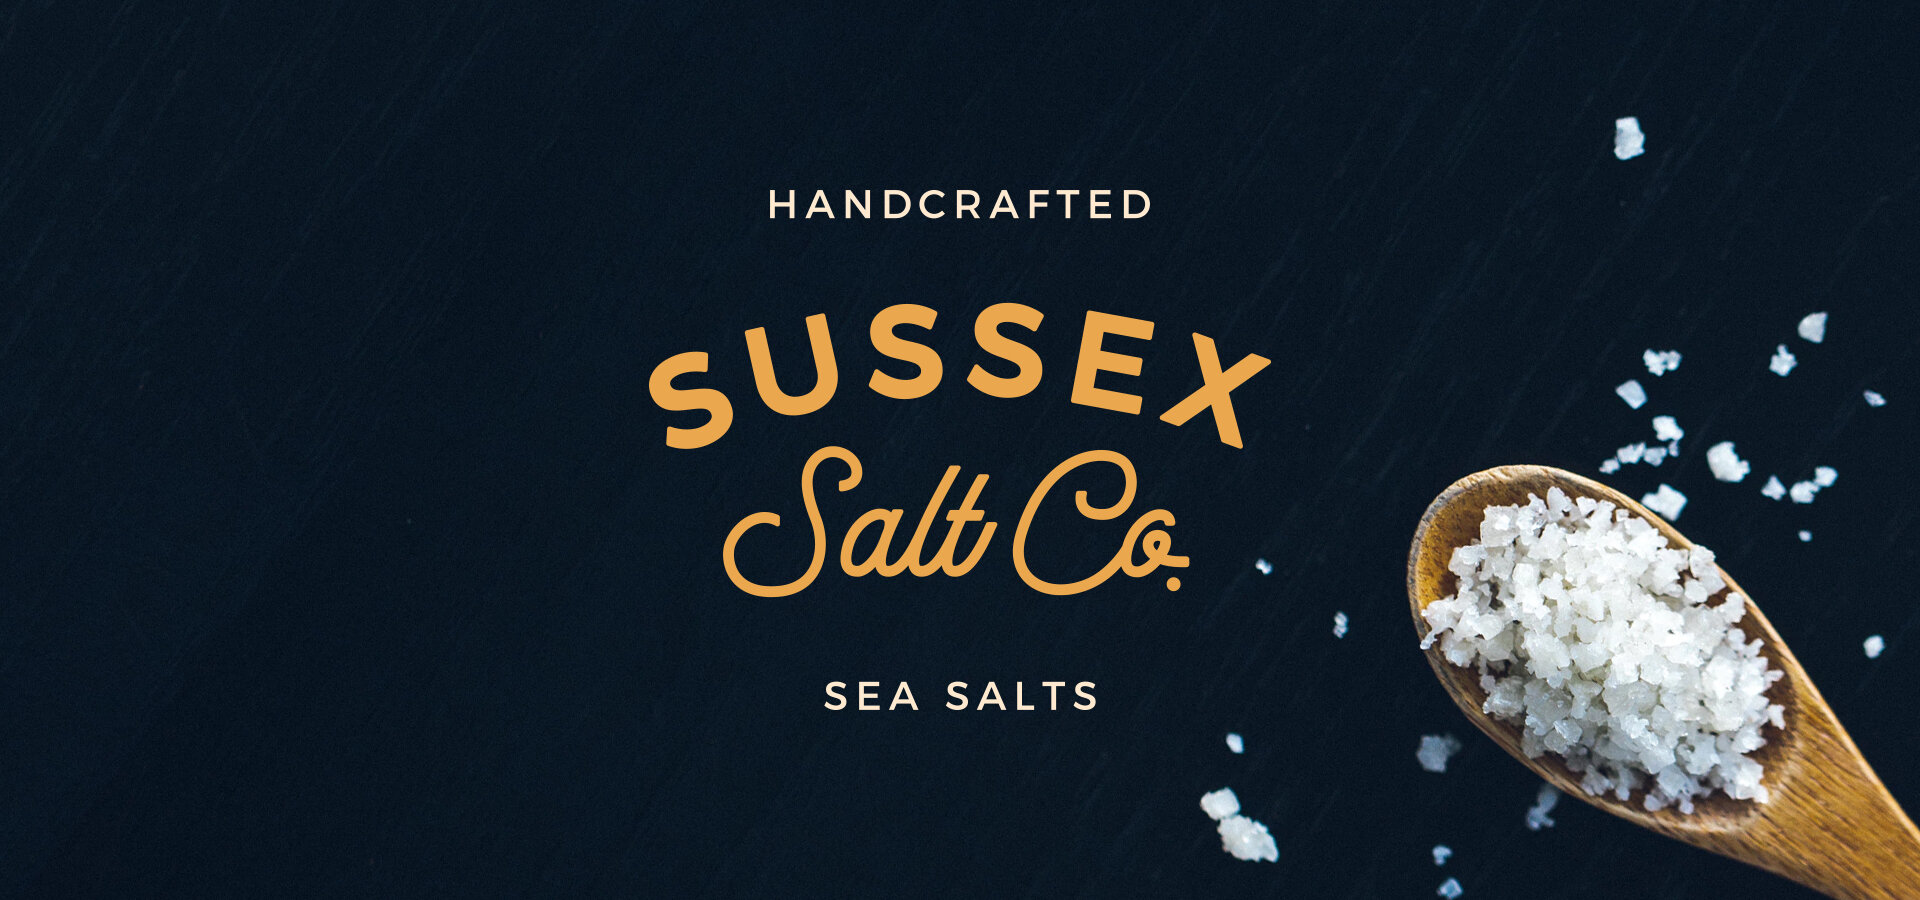 Sussex_Salt_Co_Alt_2.2.jpg